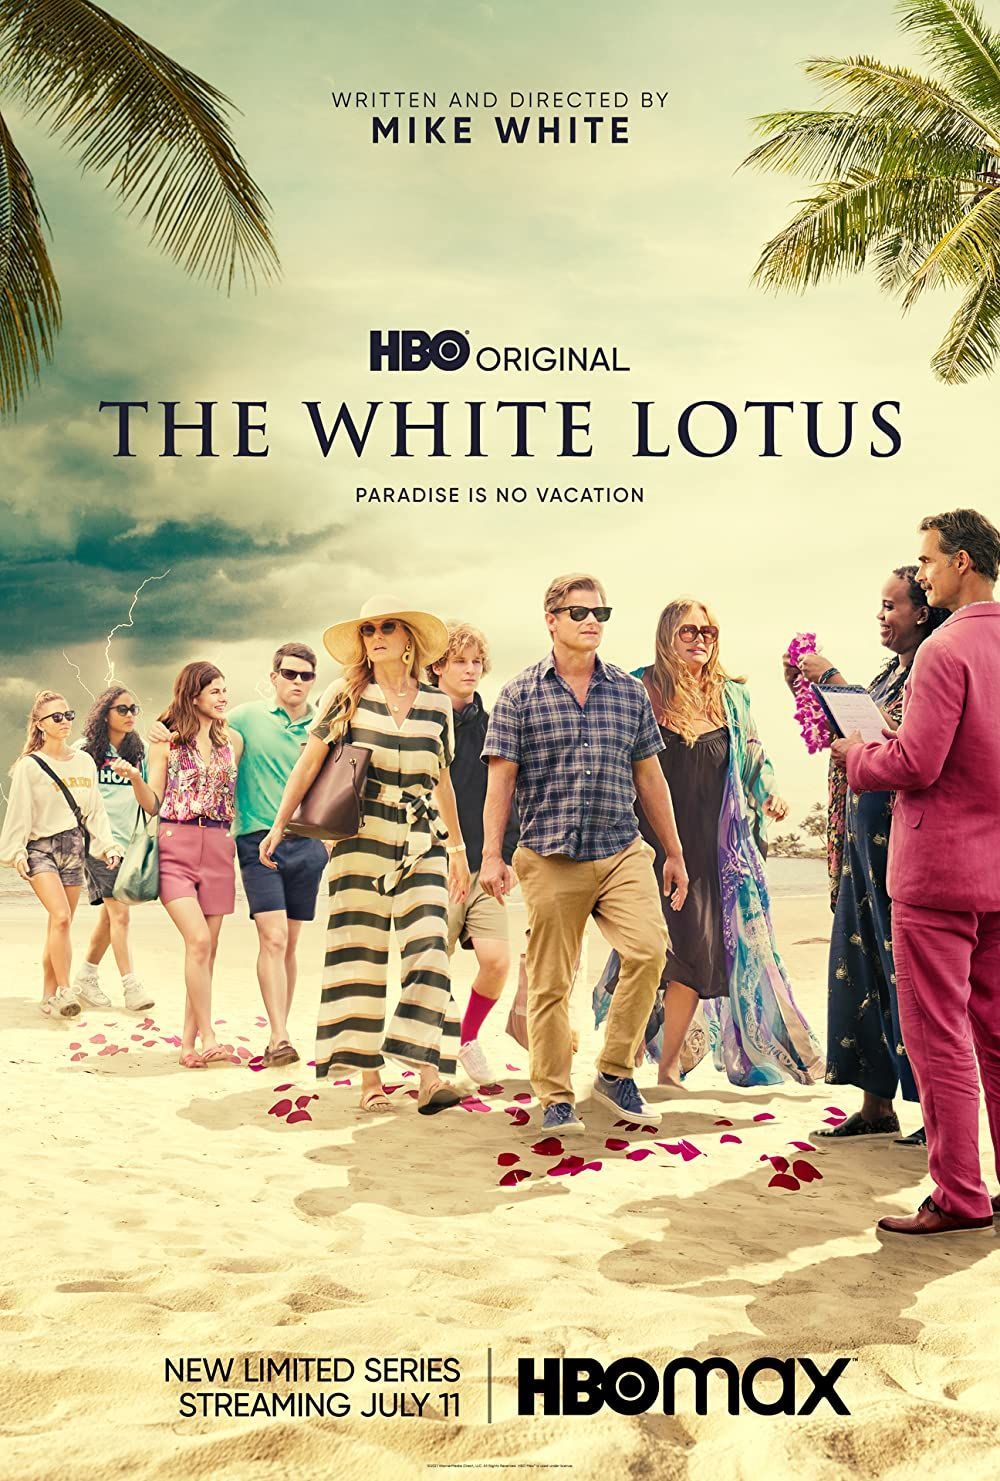 'The White Lotus' on HBO Max